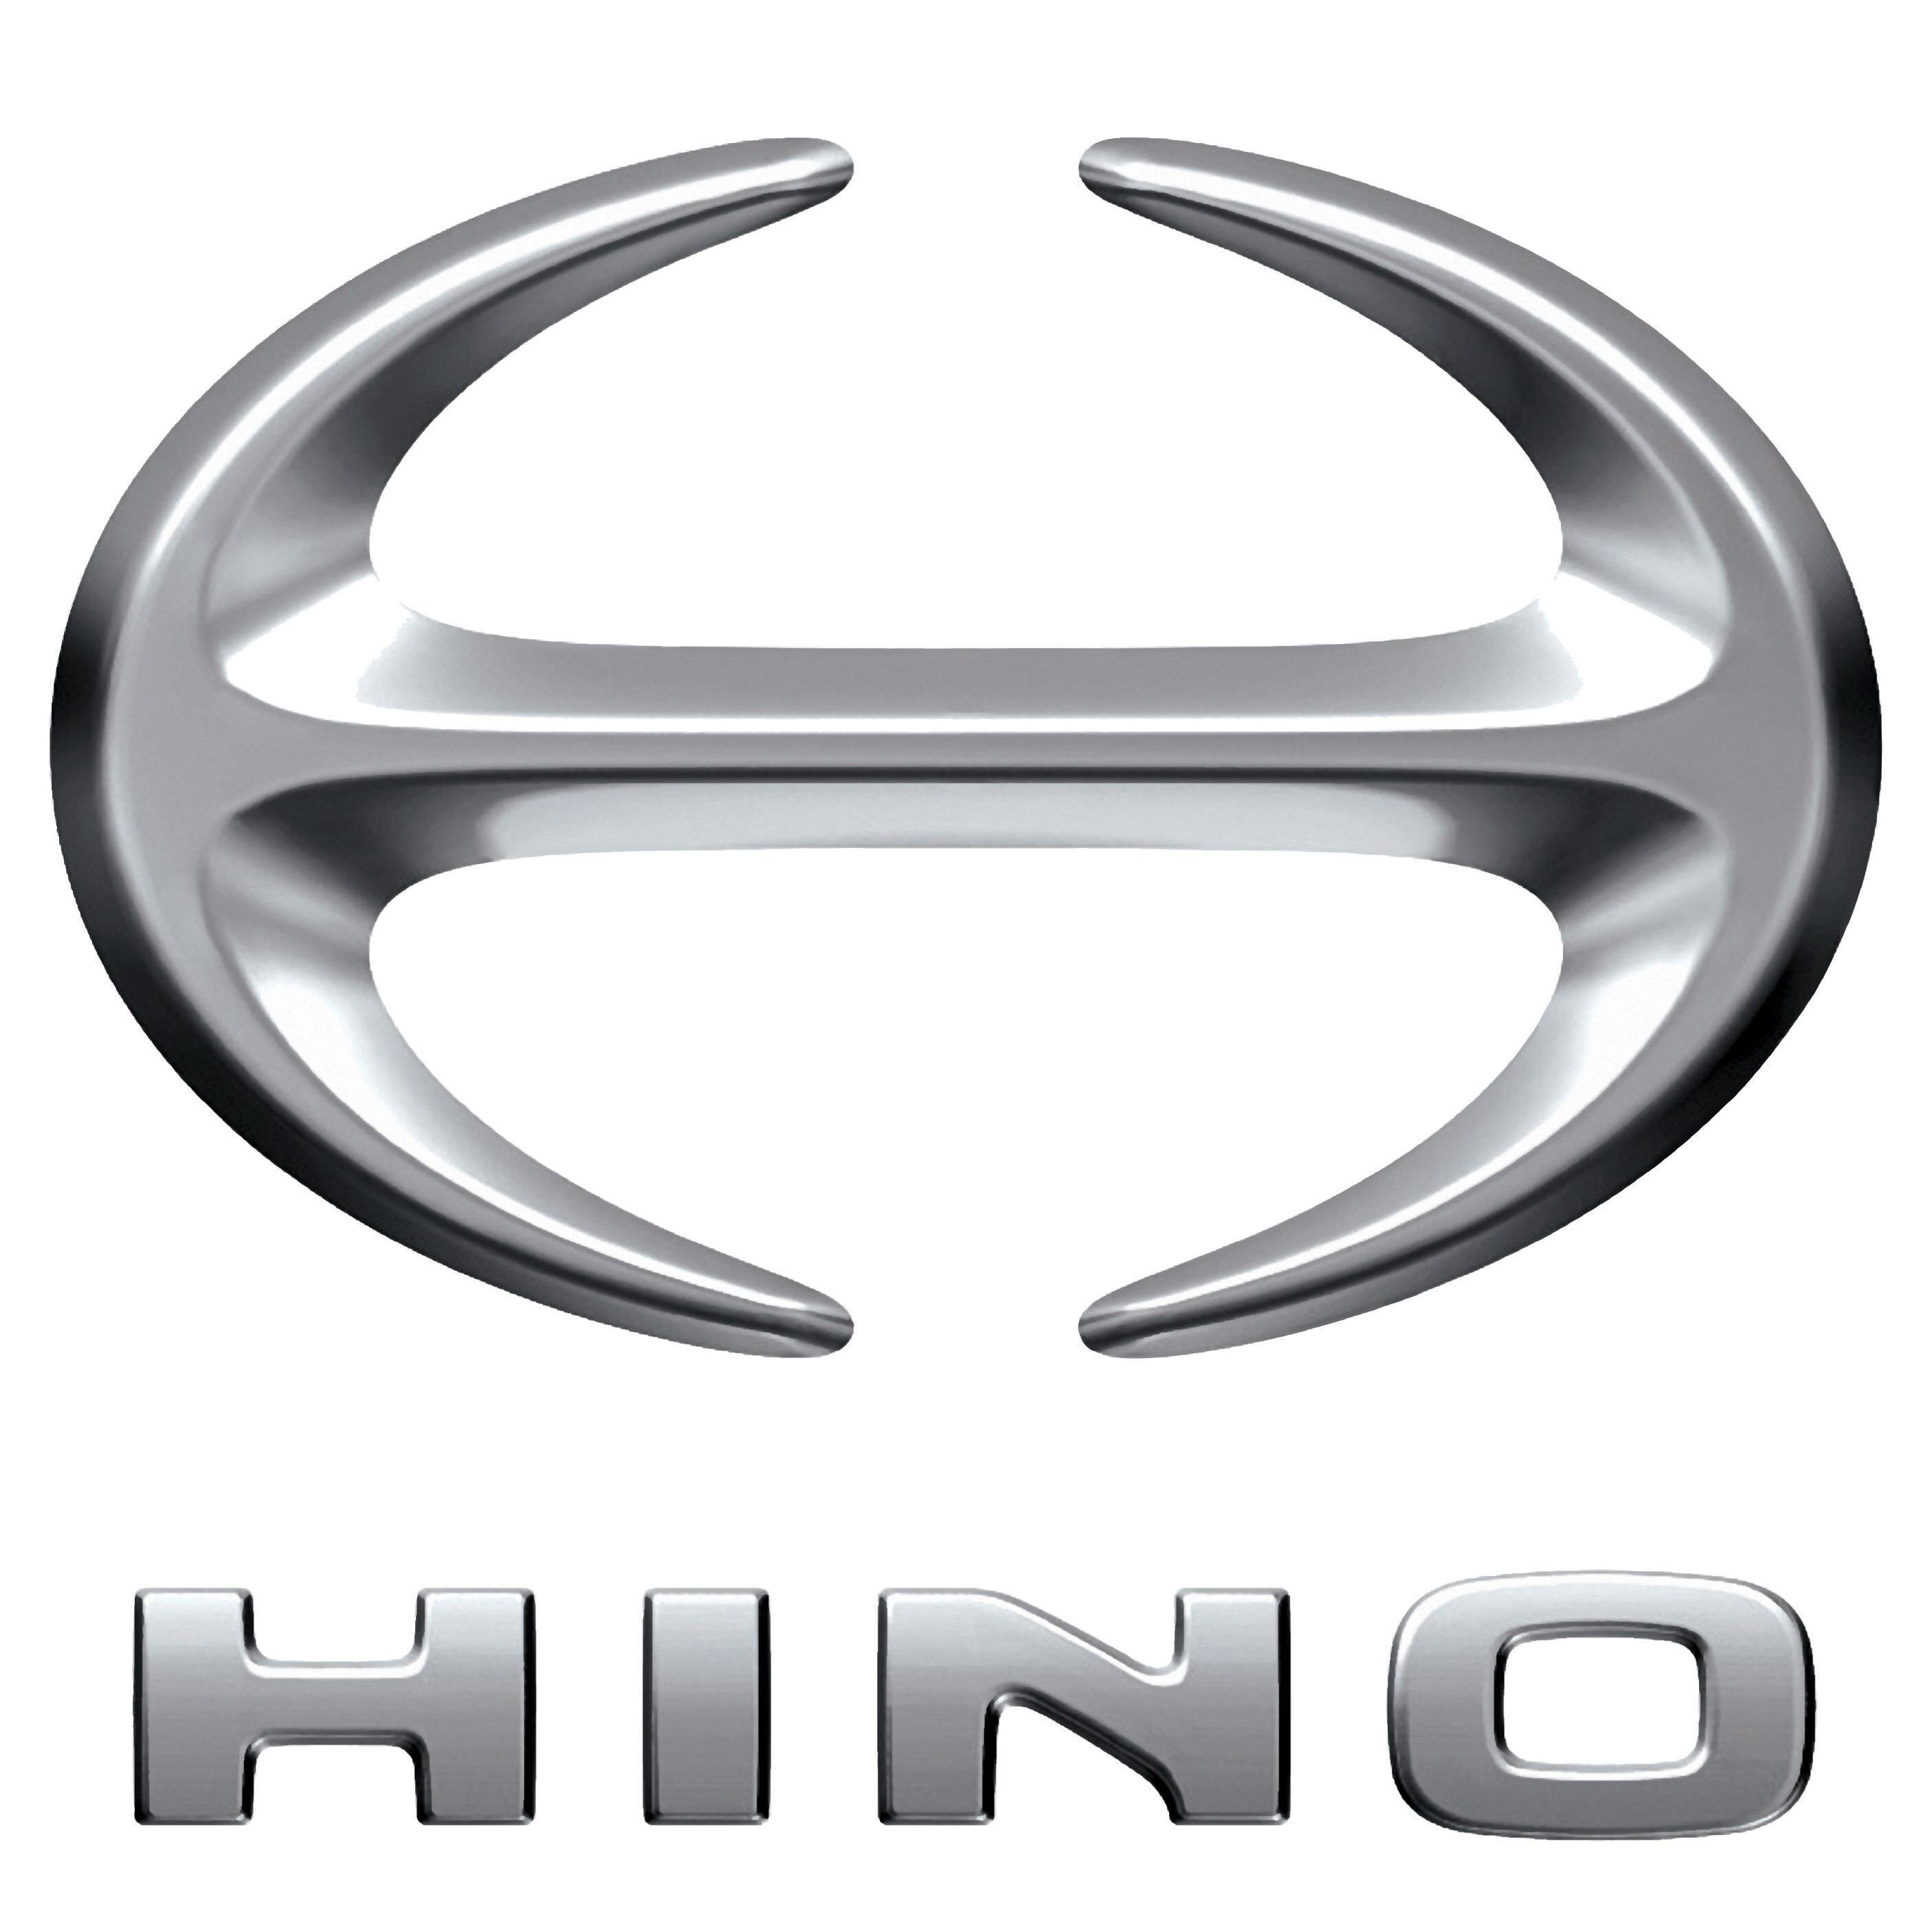 Your preferred HINO and Dyna truck dealer in the Free State

cnr Nelson Mandela & Muller Rd, Spitskop